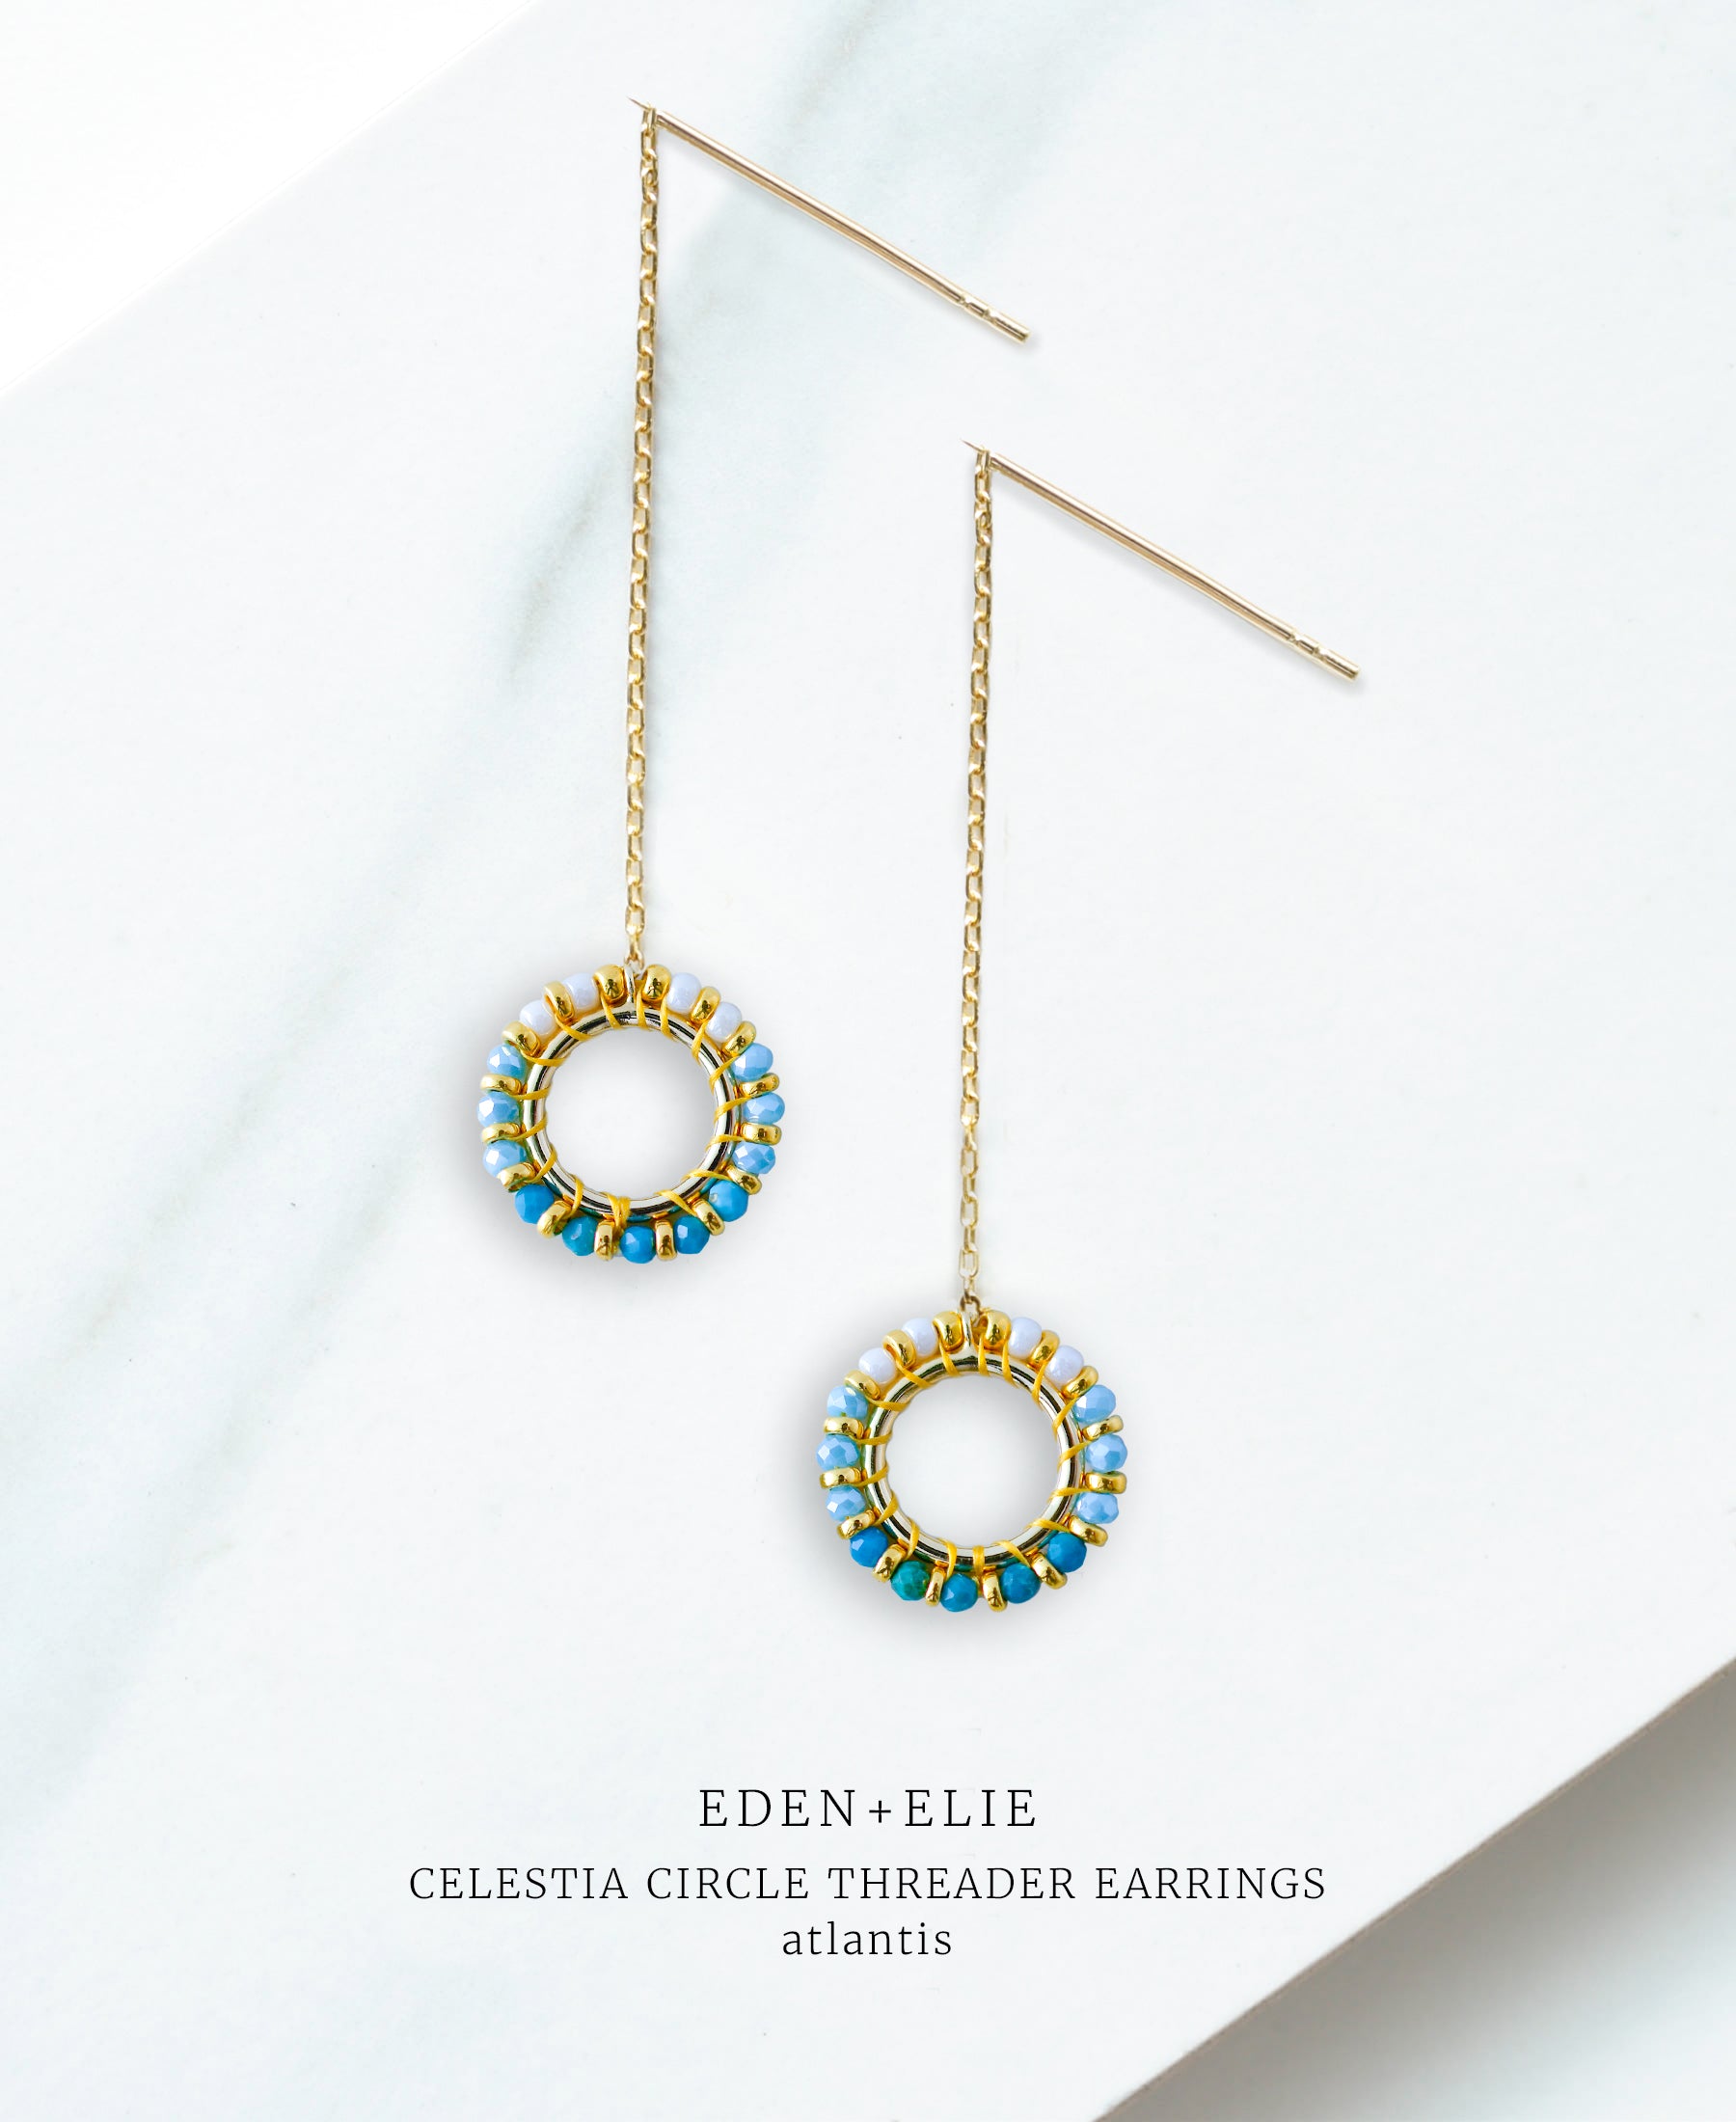 EDEN + ELIE Celestia Circle Threader Earrings - Atlantis